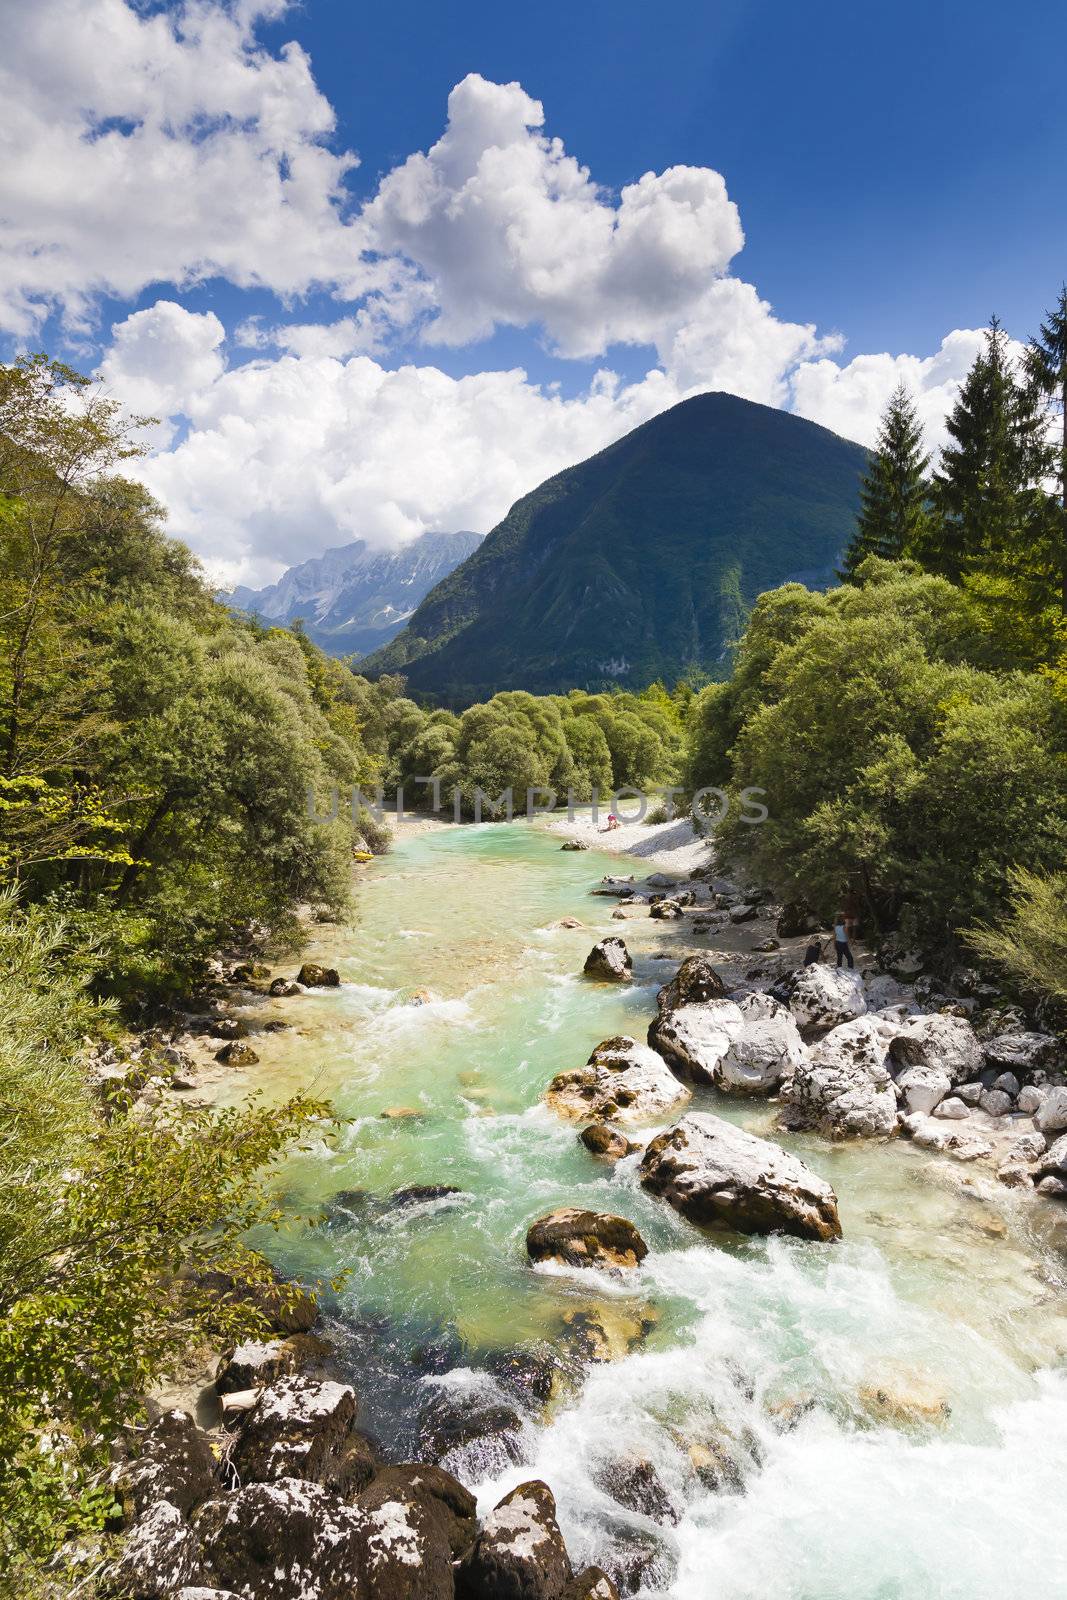 The Julian Alps in Slovenia - Soca river by furzyk73